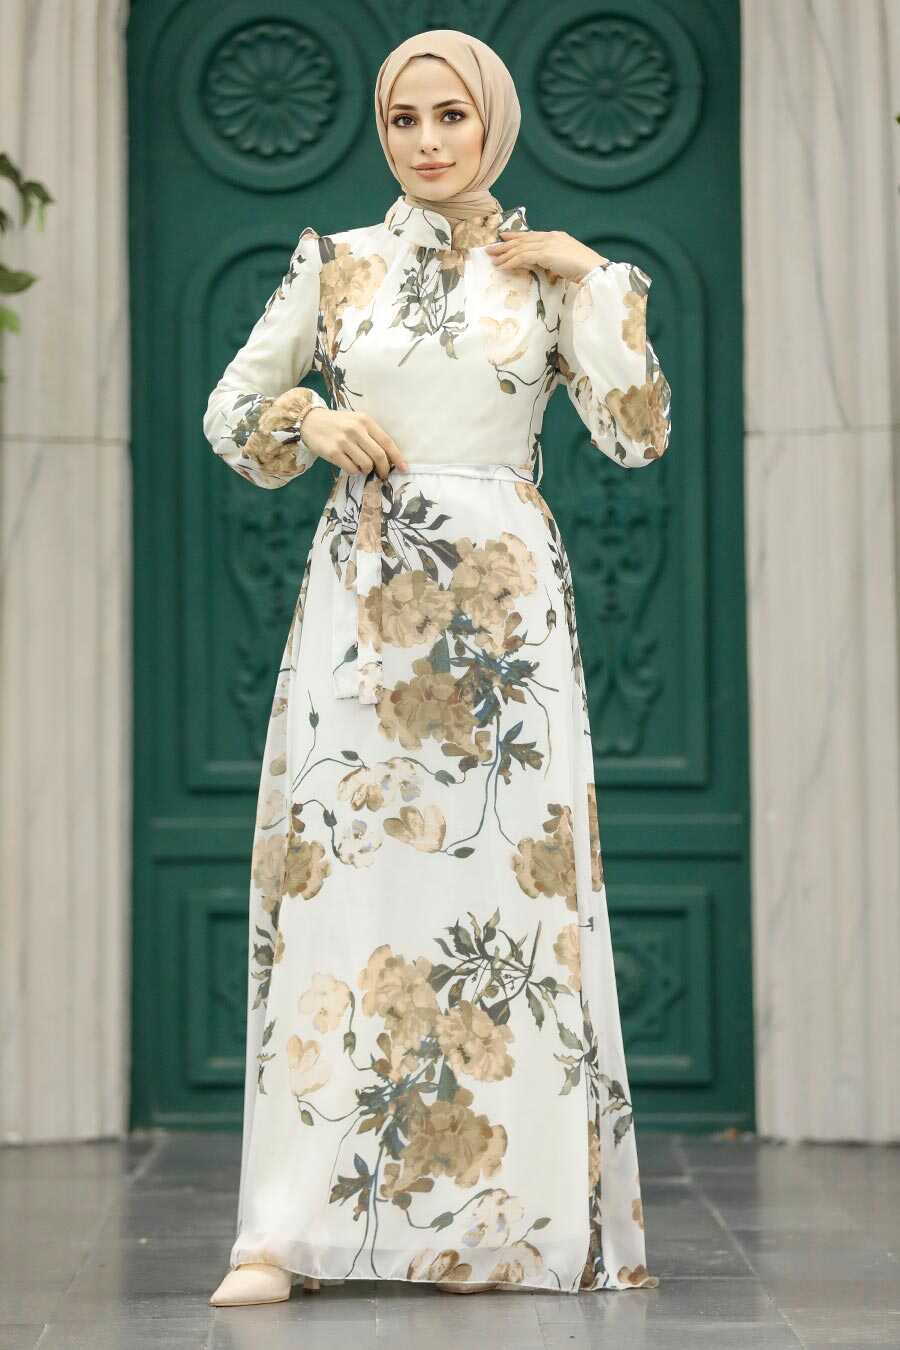 https://witcdn.neva-style.com/neva-style-stone-islamic-clothing-dress-27940tas-daily-dresses-neva-style-84574-32-B.jpg